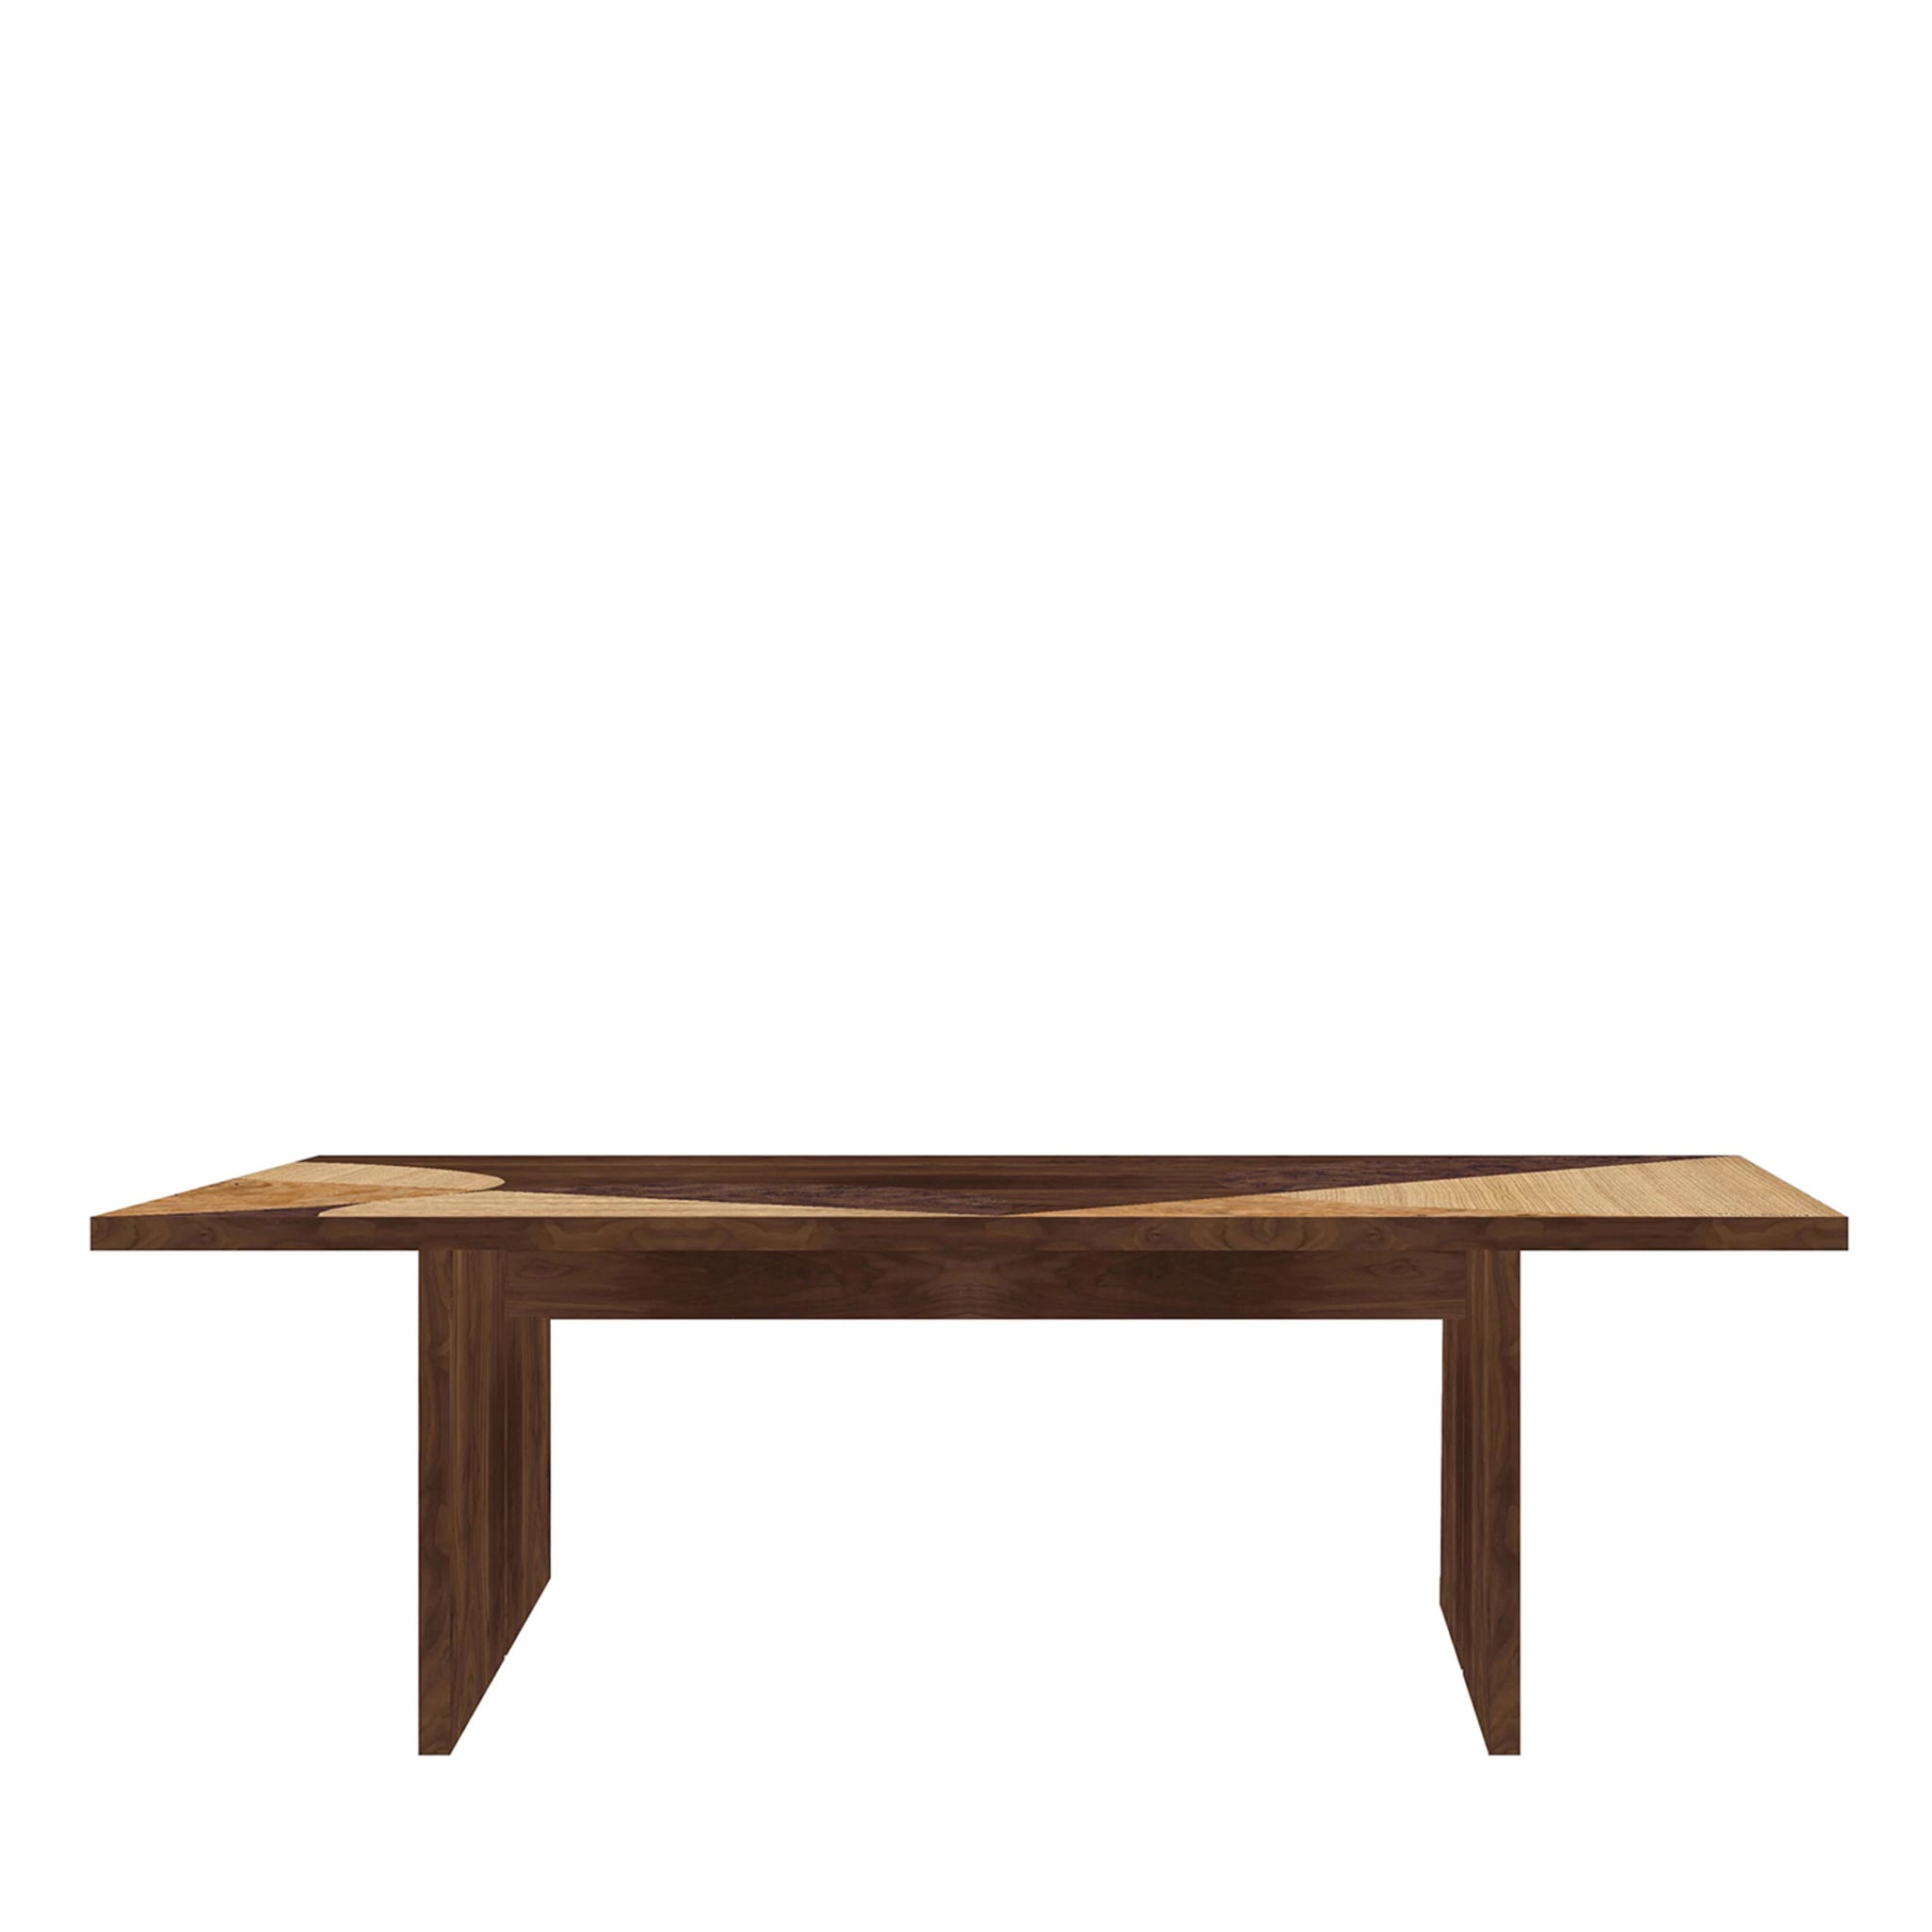 Tarsia Tables Tt6 Table rectangulaire polychrome par Mascia Meccani - Vue principale